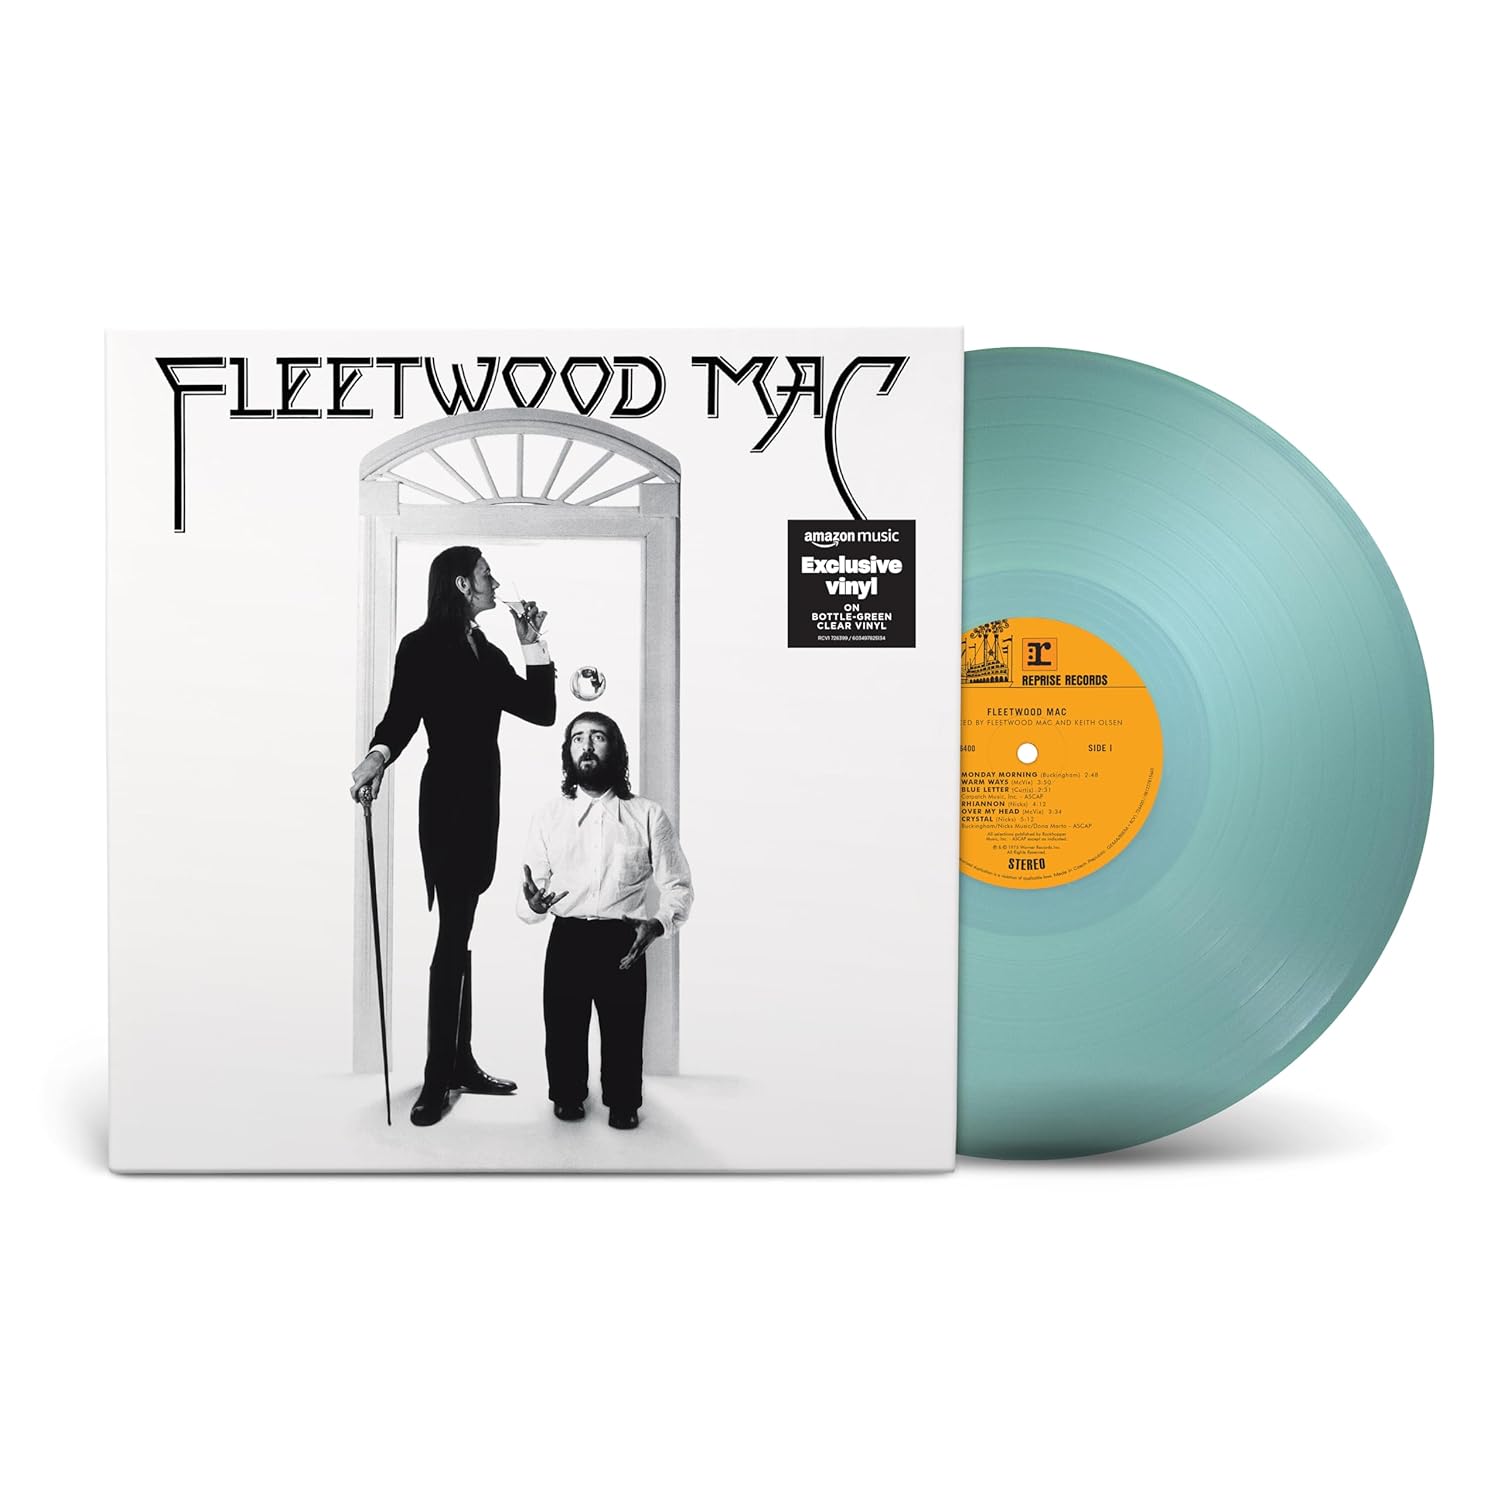 FLEETWOOD MAC – FLEETWOOD MAC bottle green clear vinyl LP